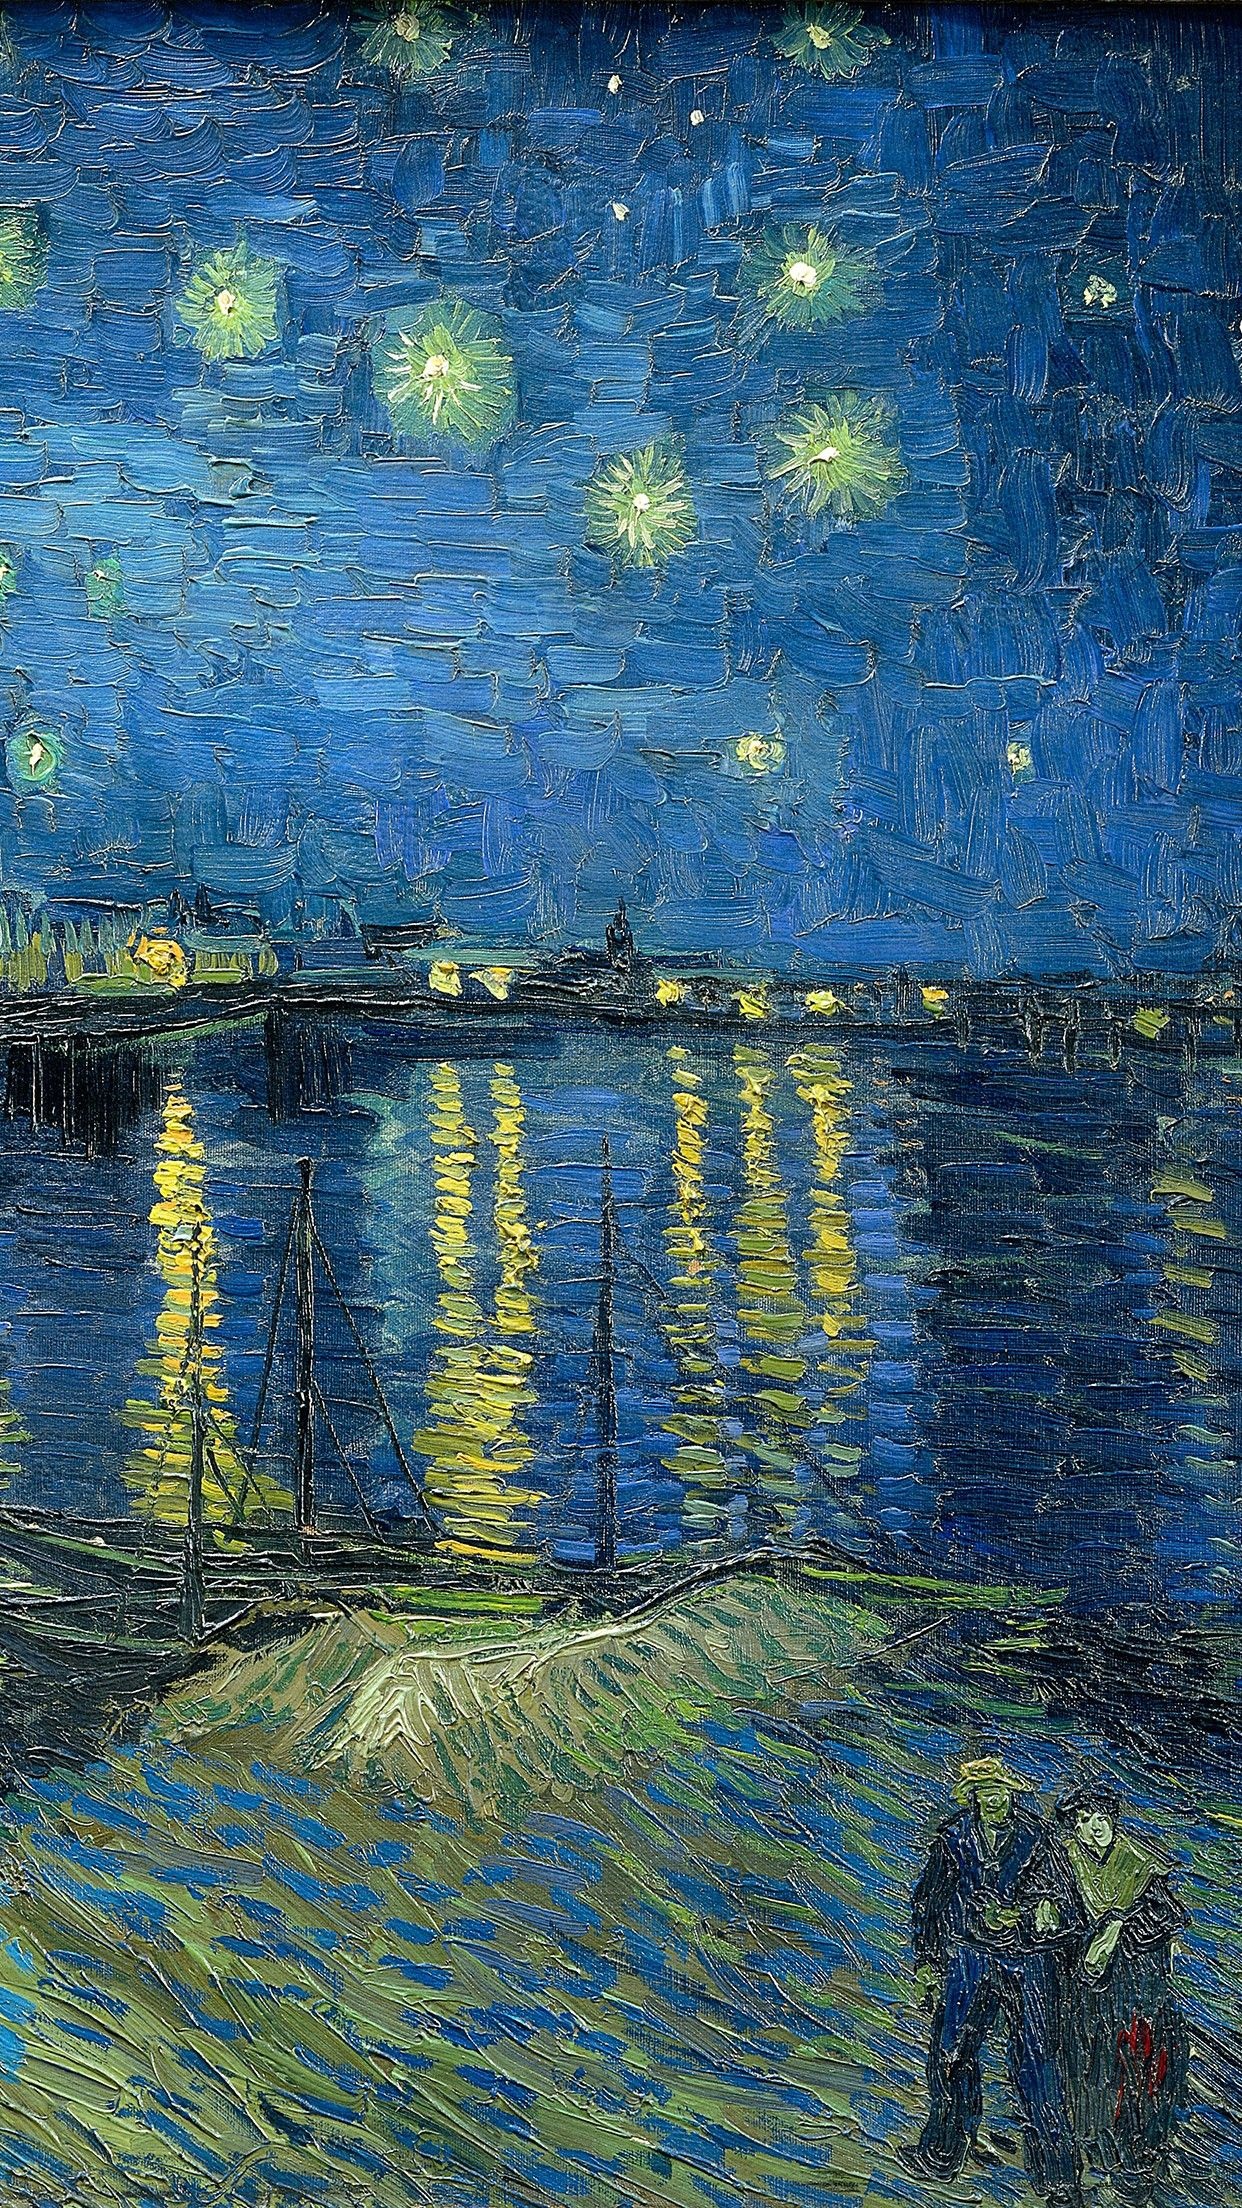 HD wallpaper, Stunning Visuals, Samsung Hd Vincent Van Gogh Background Image, 1250X2210 Hd Phone, Hd 4K 5K, Pc And Mobile Friendly, Van Gogh Wallpapers